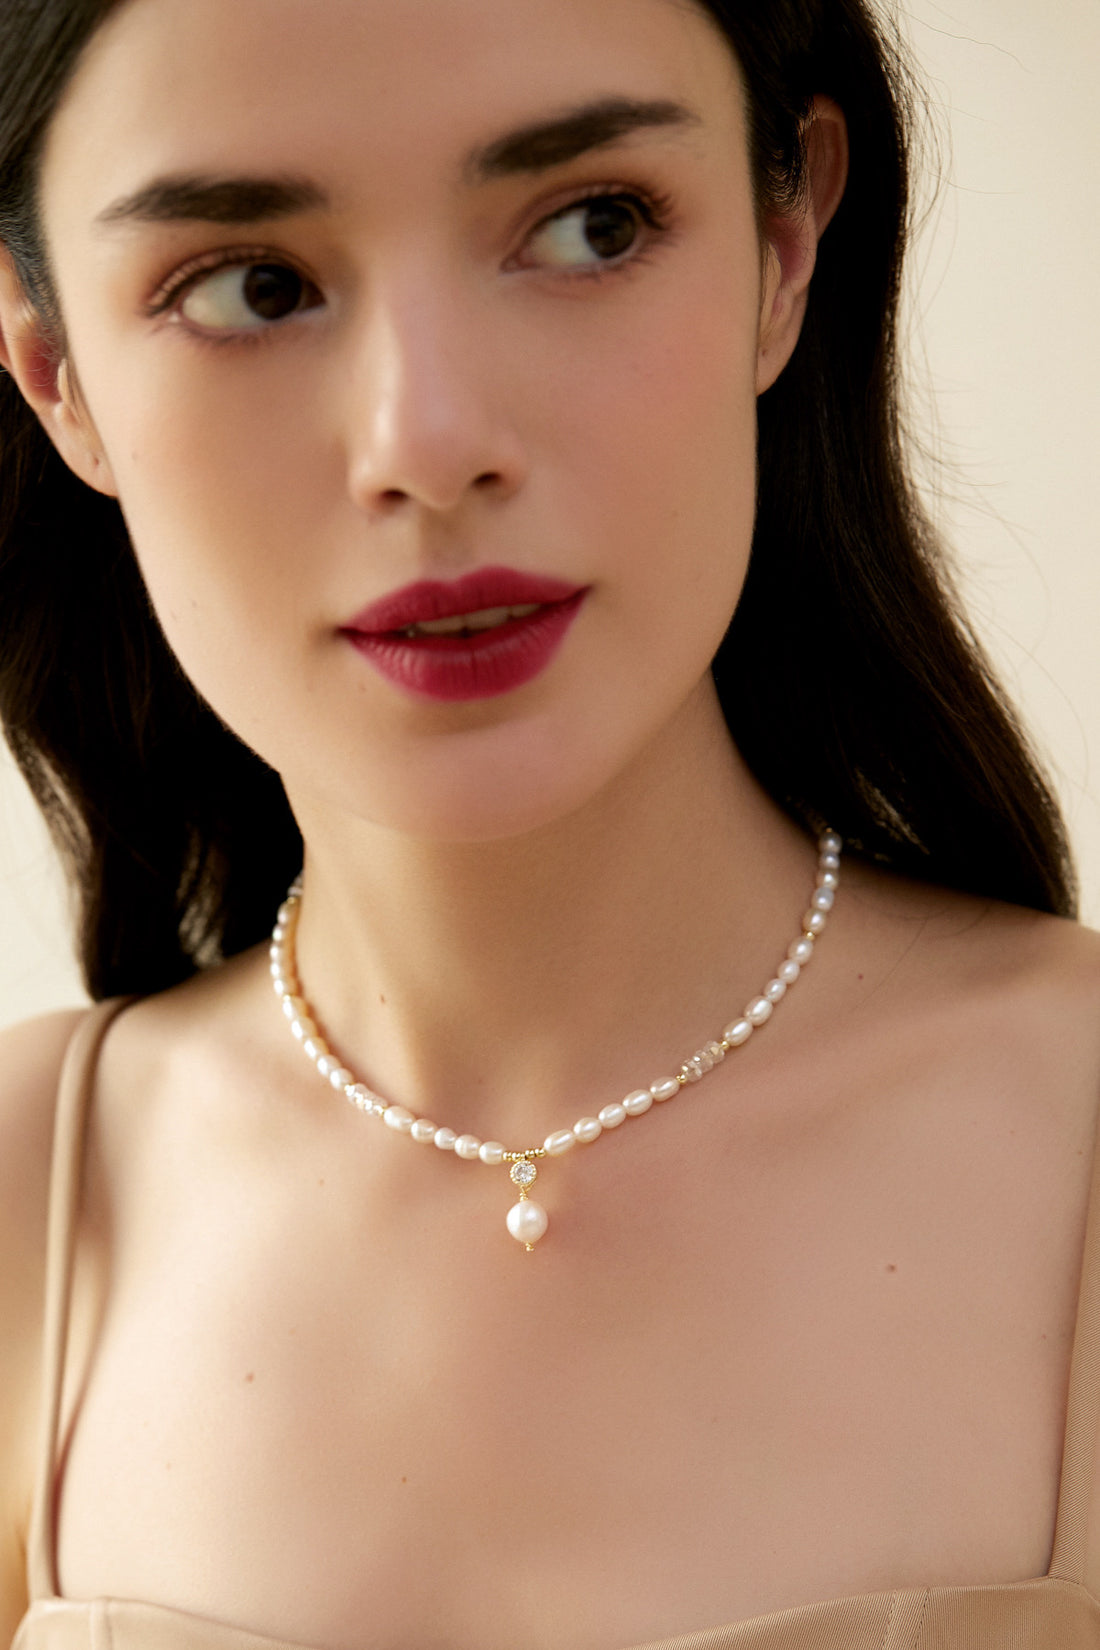 SKYE San Francisco Shop SF Chic Modern Elegant Classy Women Jewelry French Parisian Minimalist Lena pearl chocker necklace 9